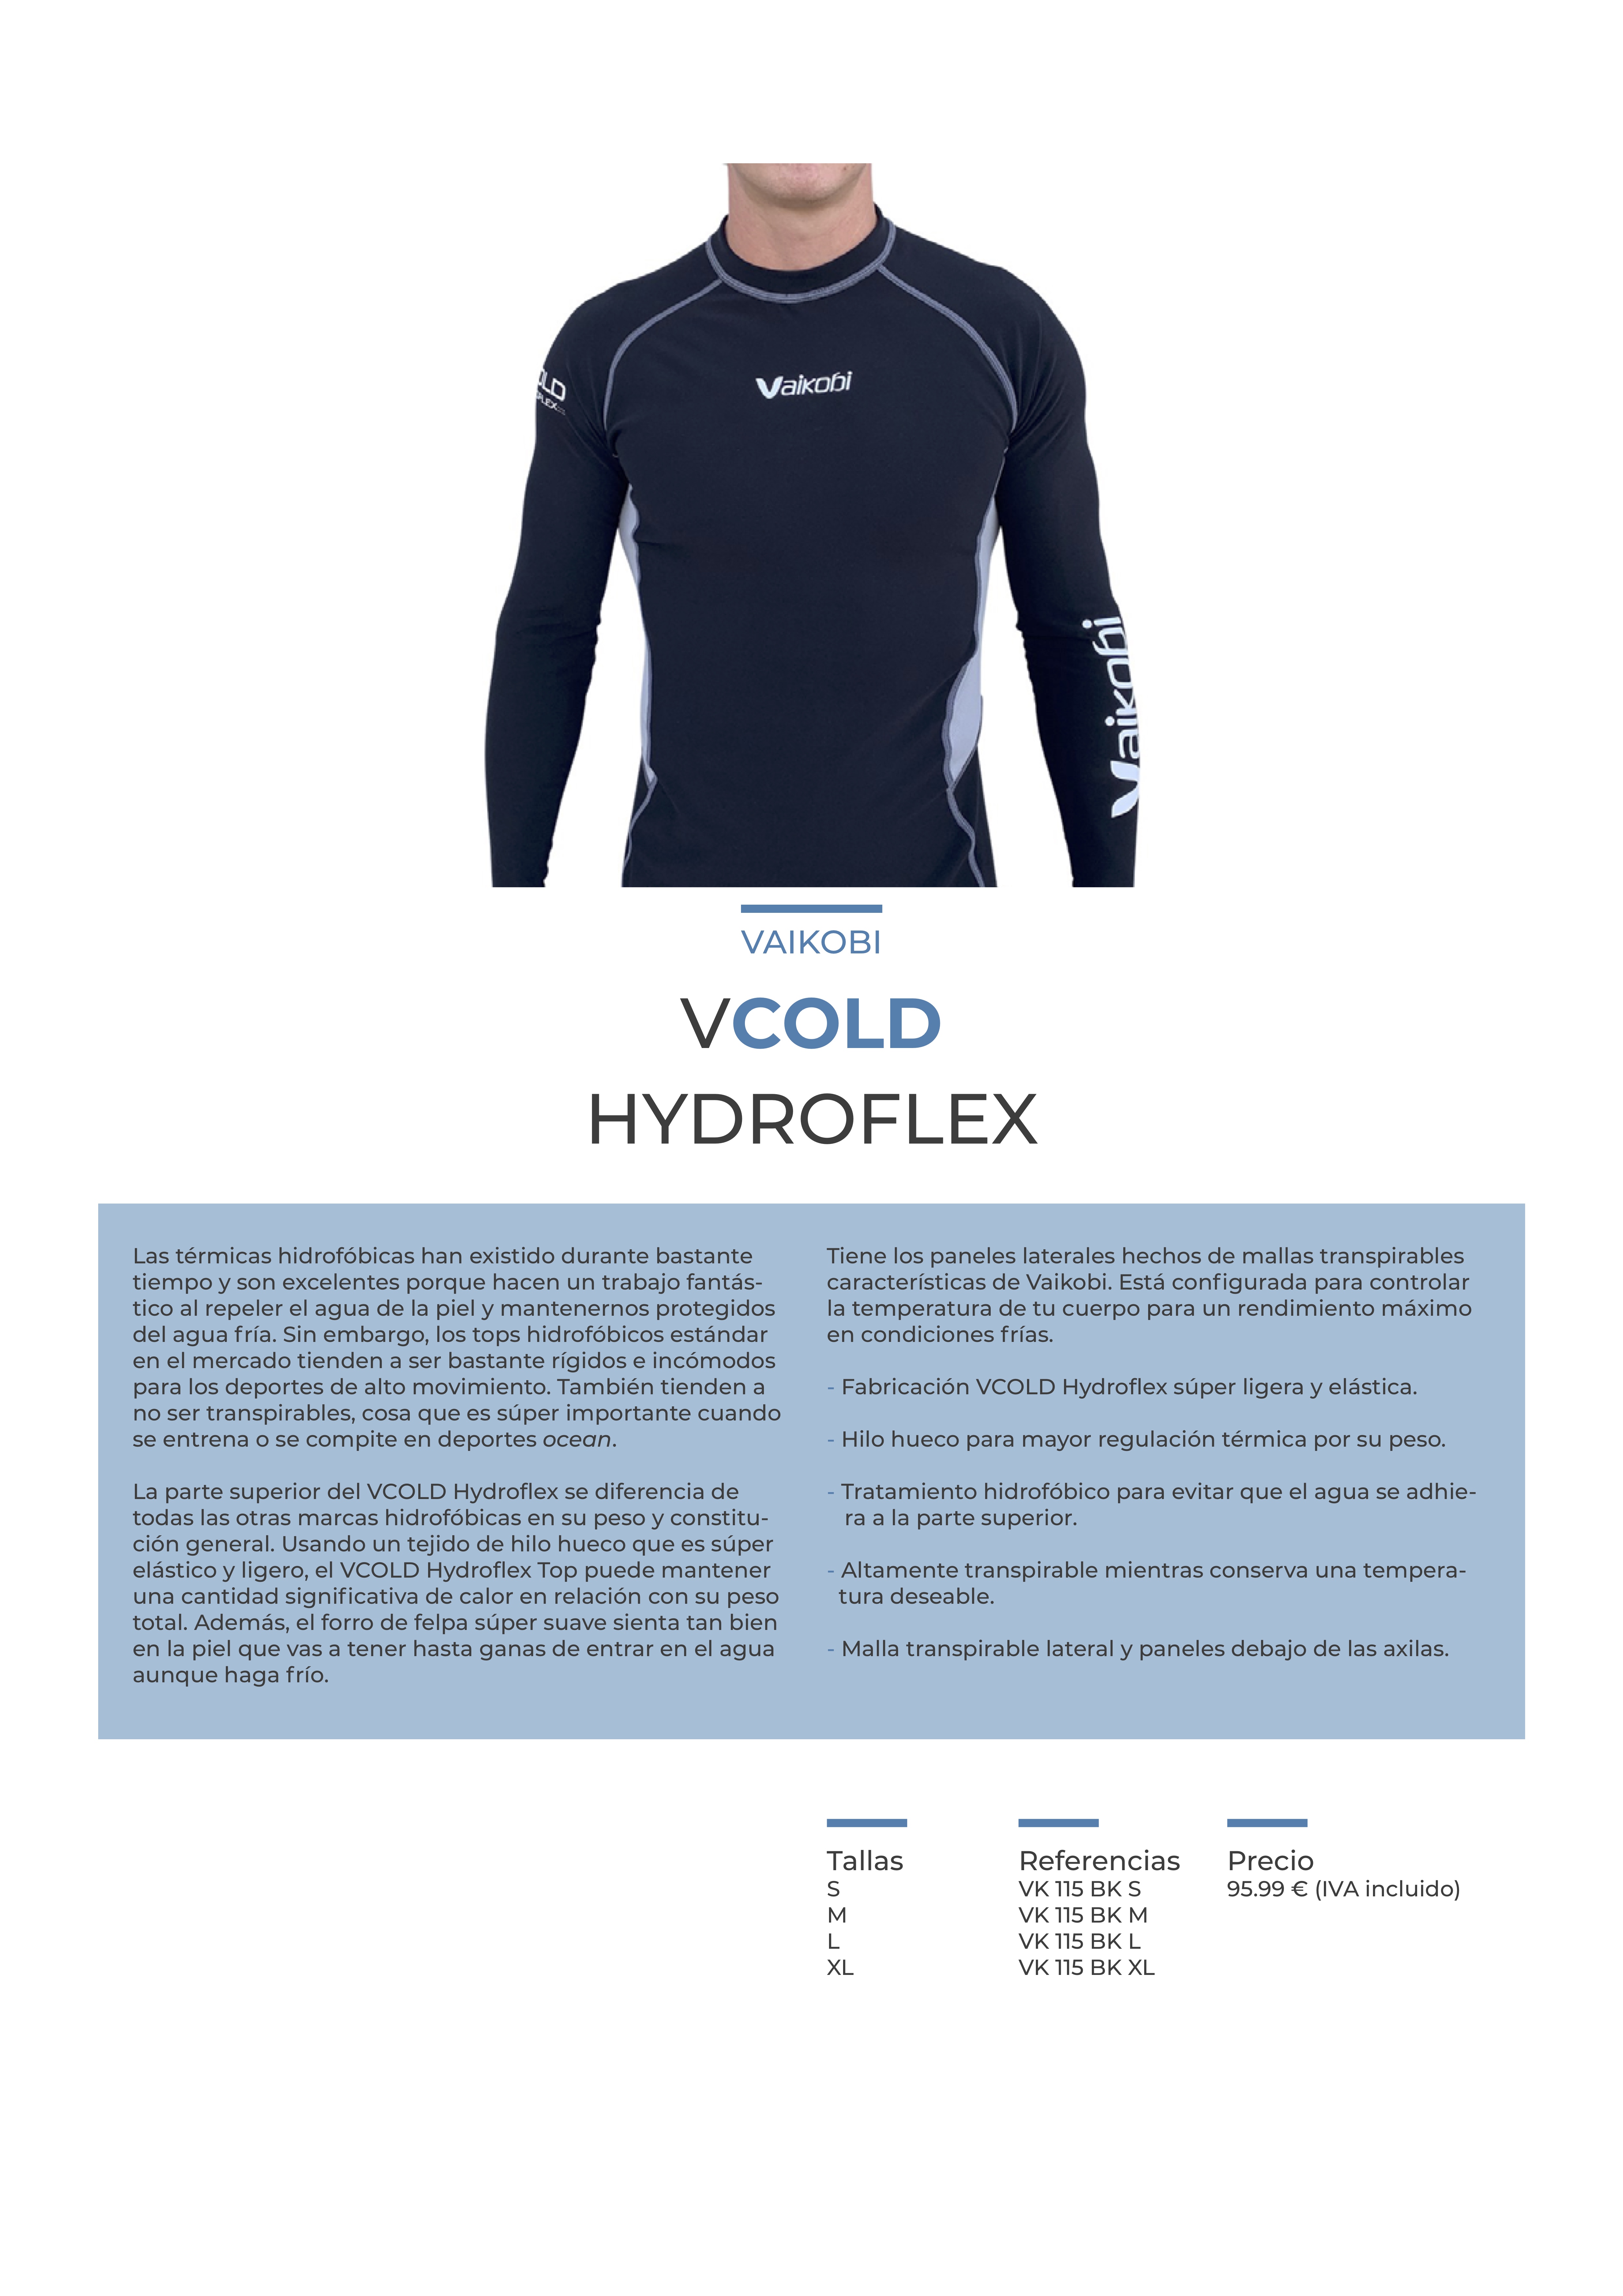 Vcold Hydroflex Top